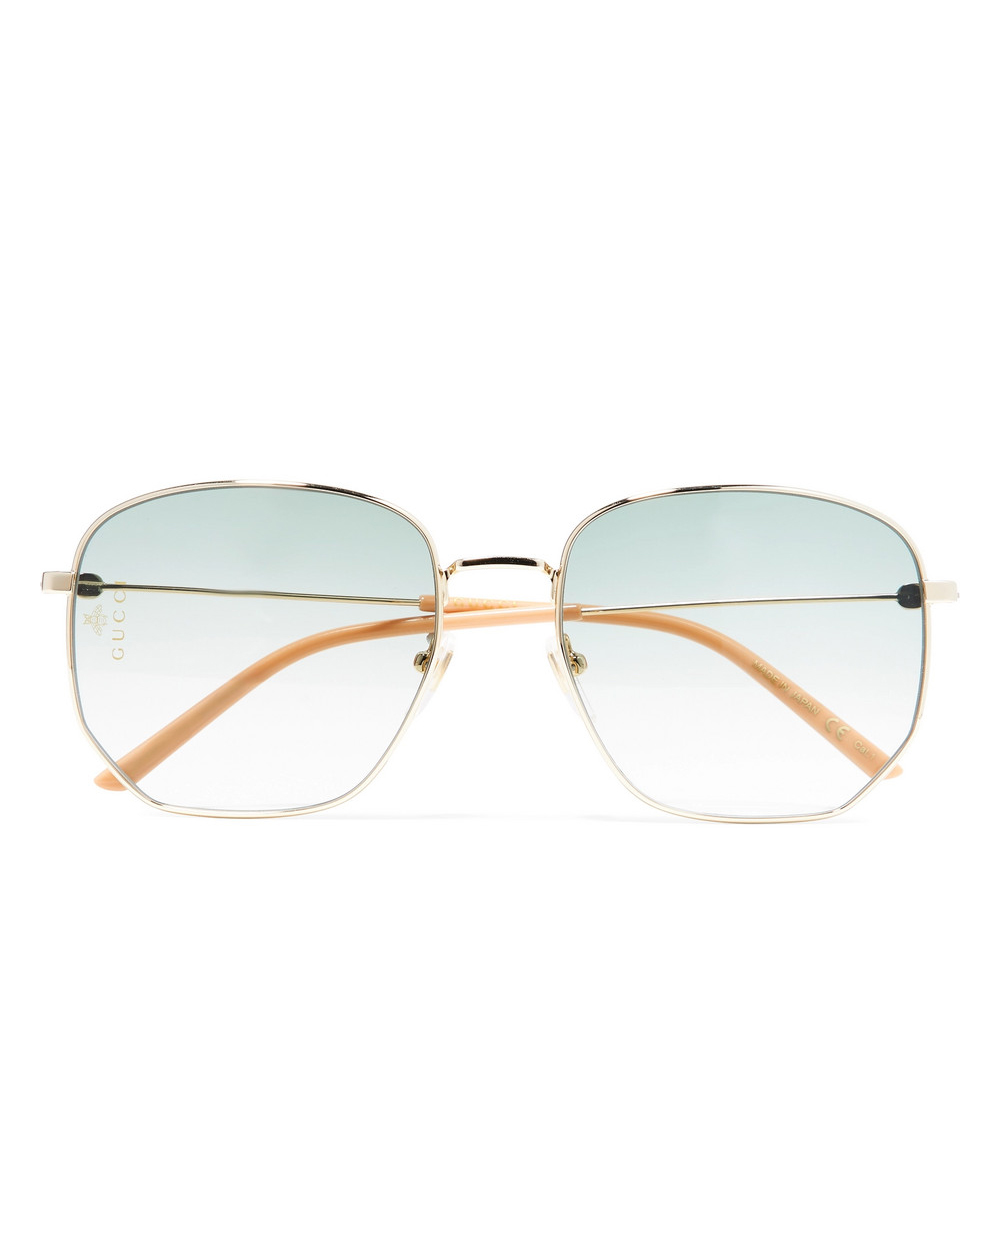 Gucci sunglasses, $505 USD from Net-a-Porter